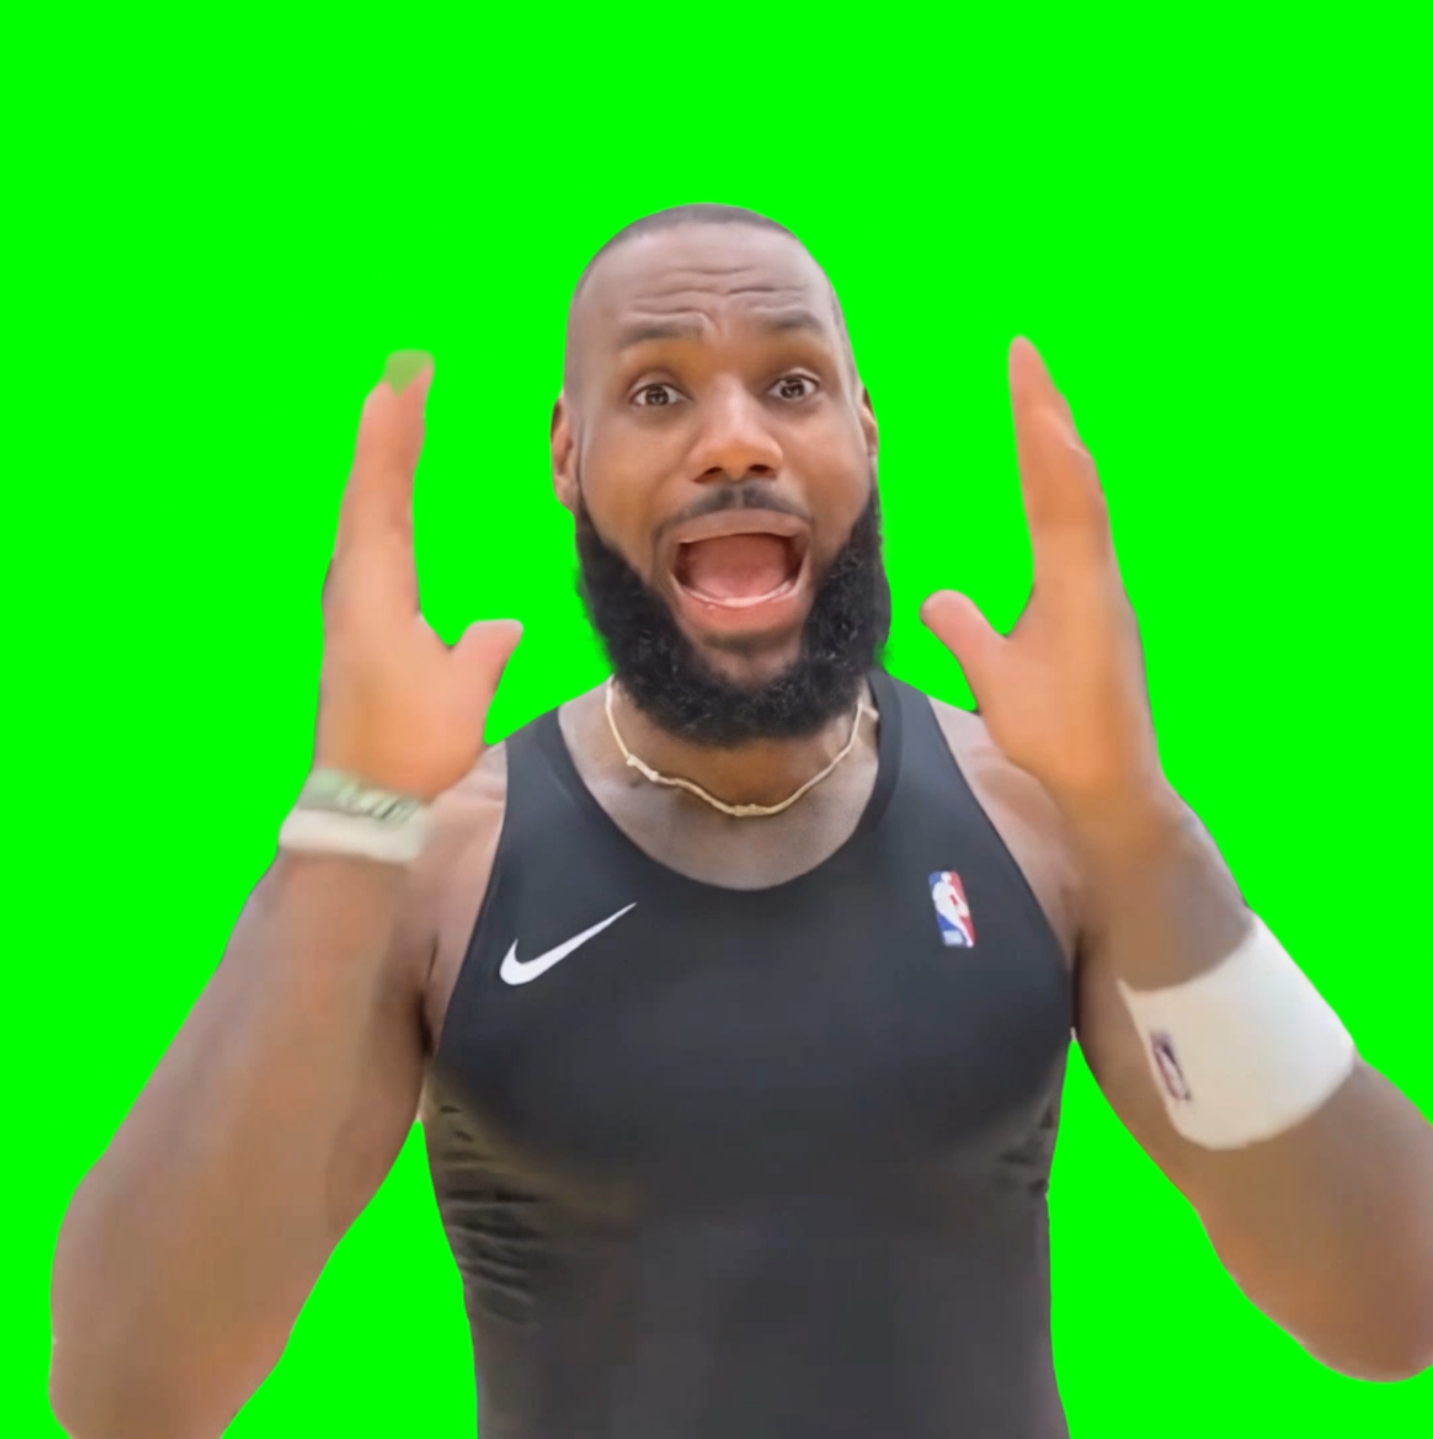 LeBron James Screaming meme (Green Screen)